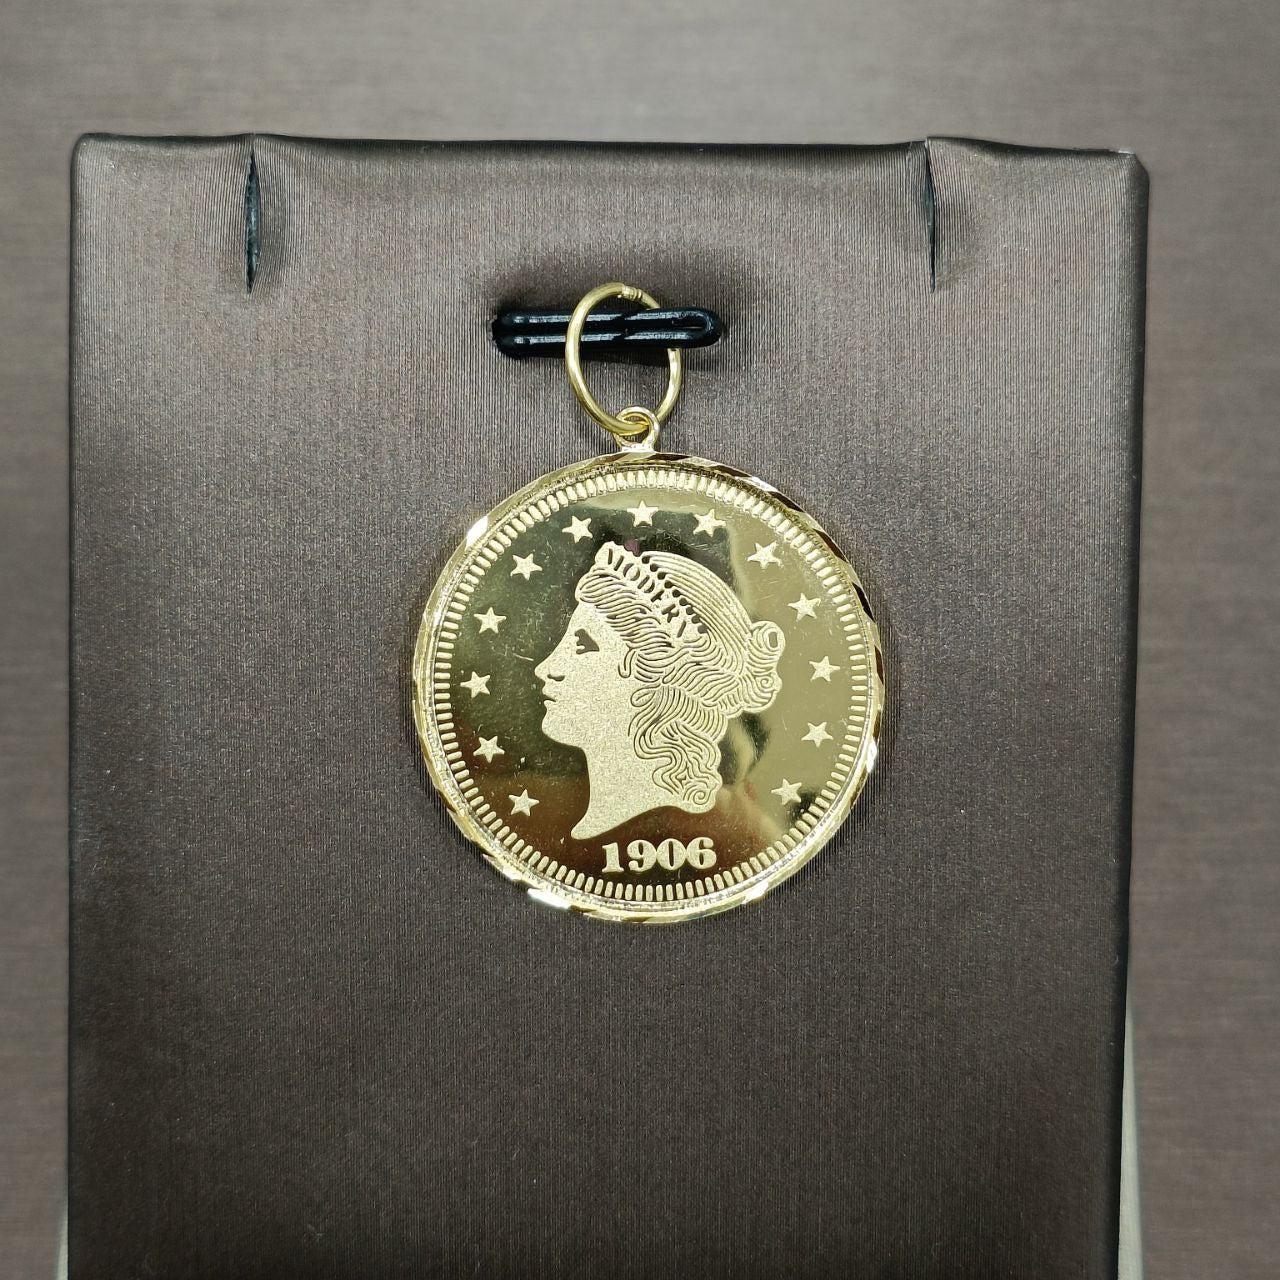 22k / 916 gold Queen Elizabeth Coin pendant-916 gold-Best Gold Shop